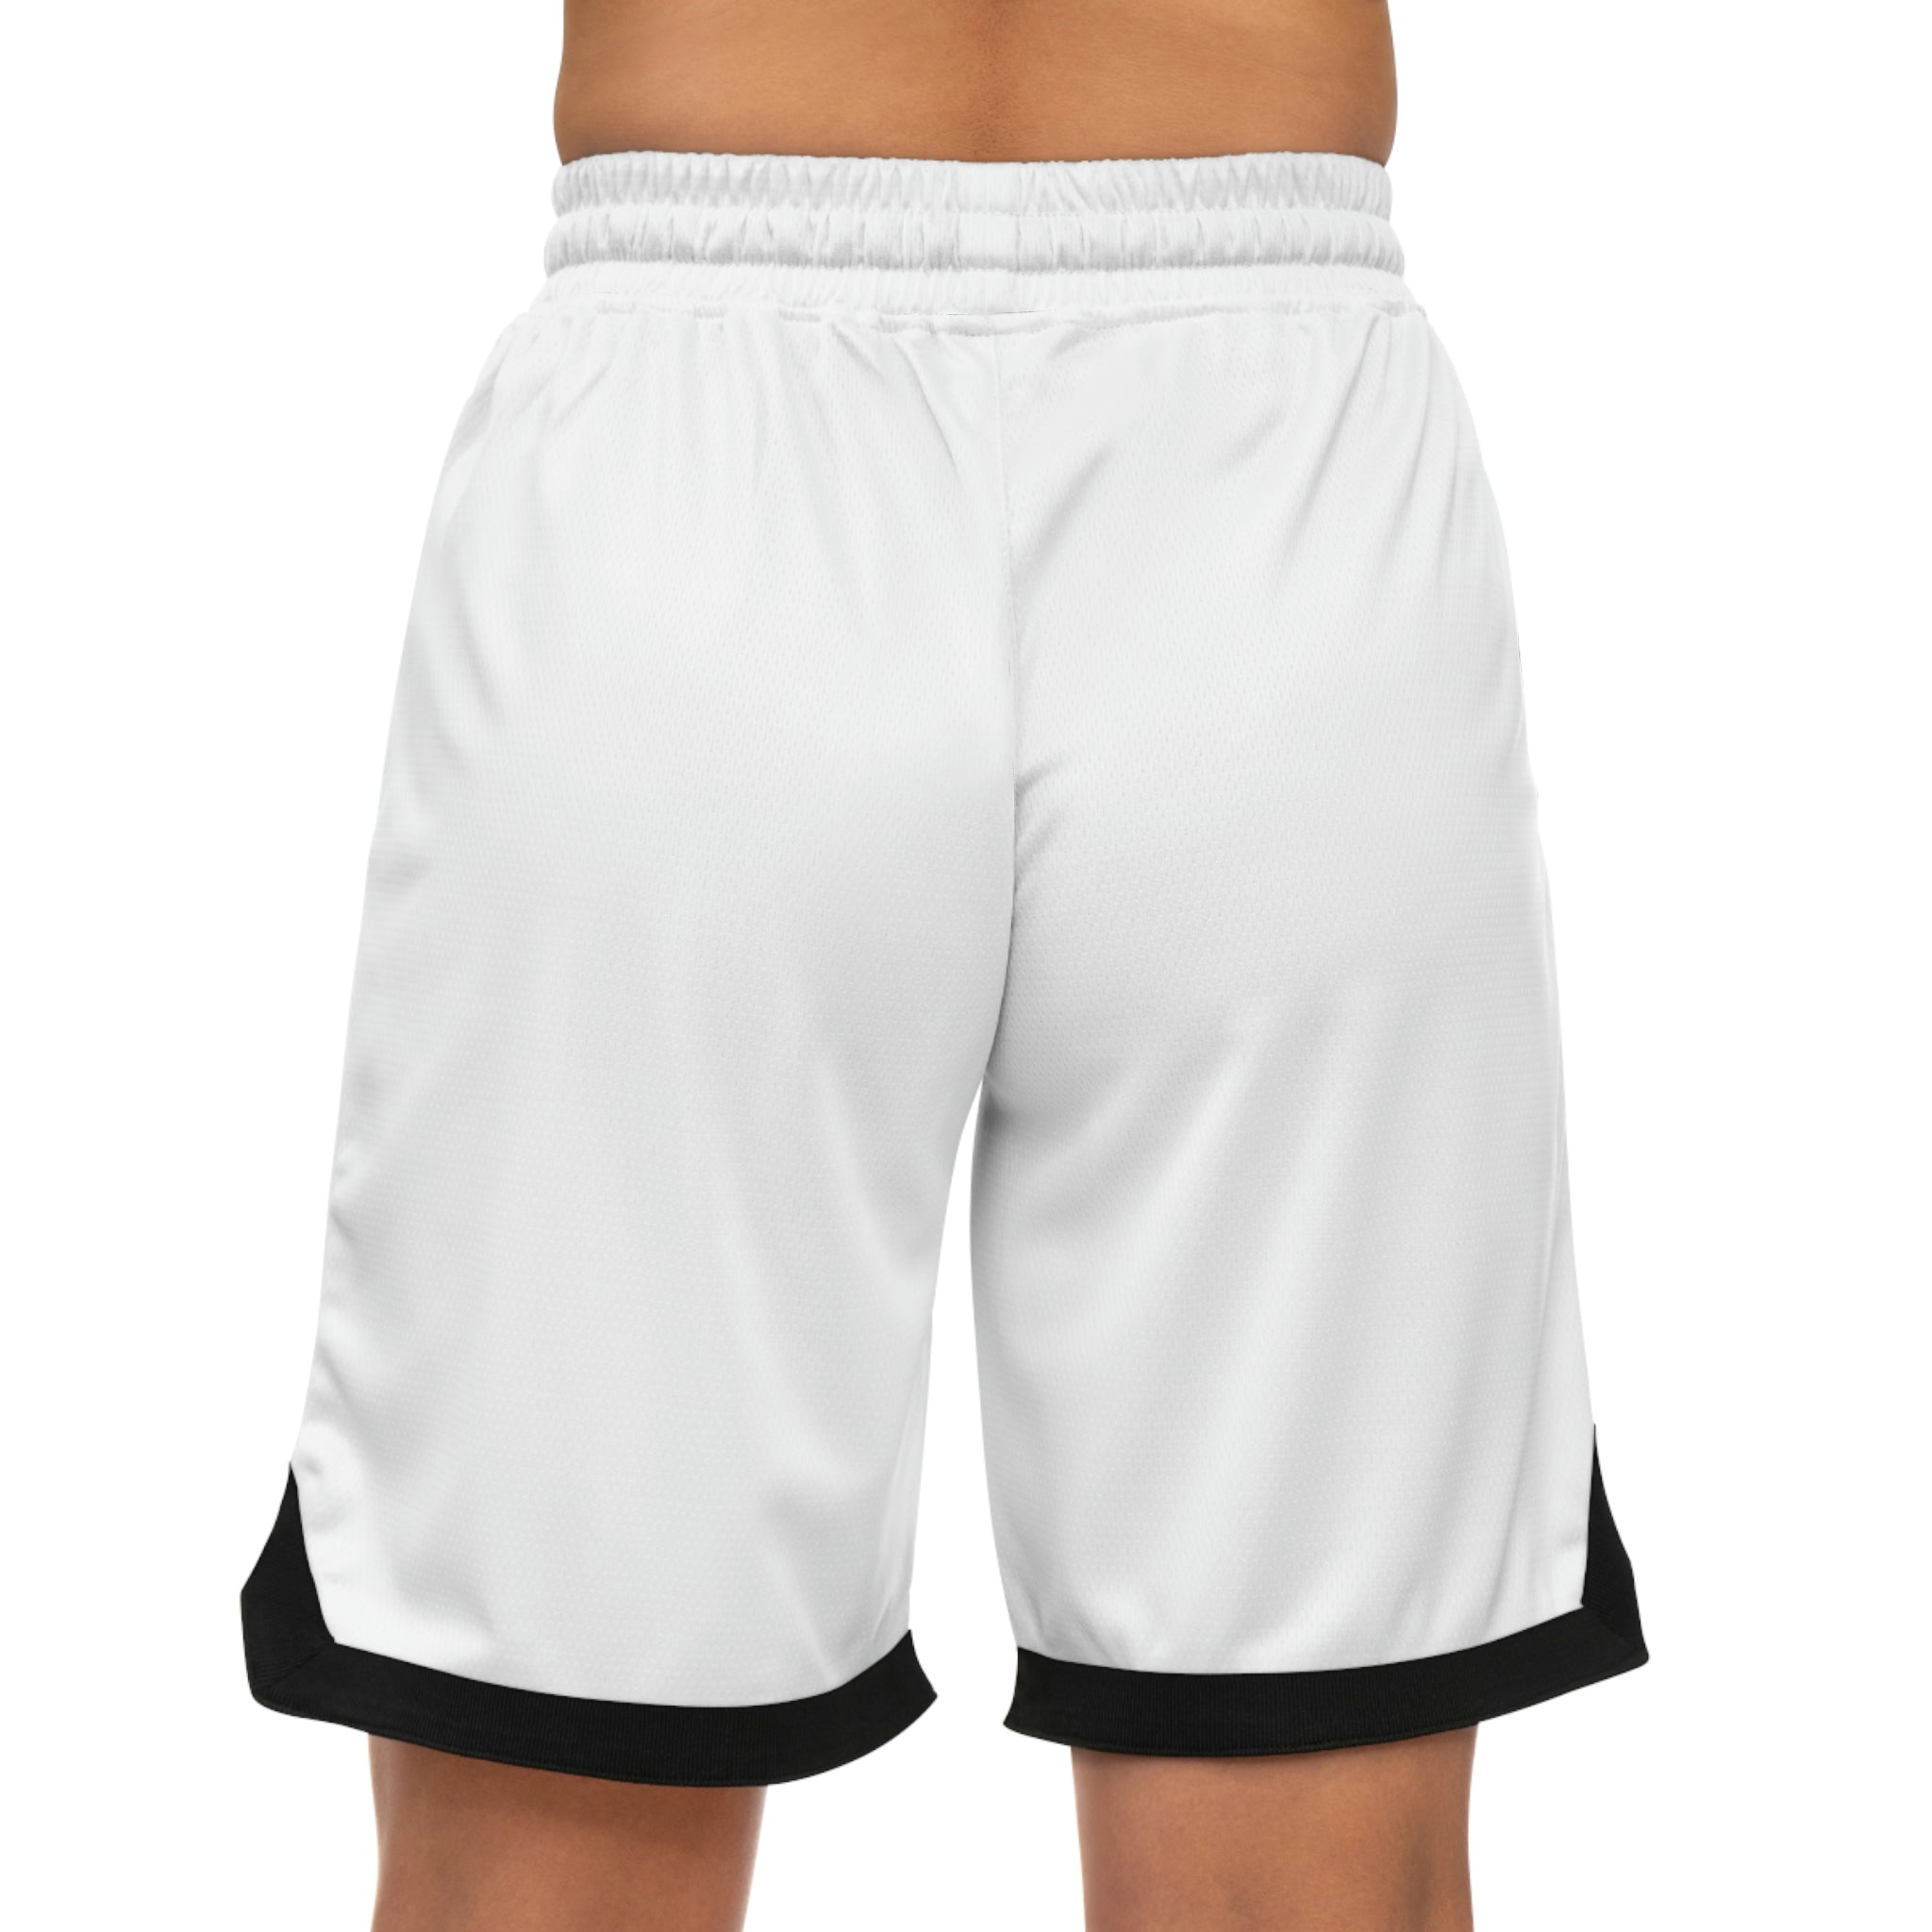 Combinedminds Basketball Shorts Black Logo